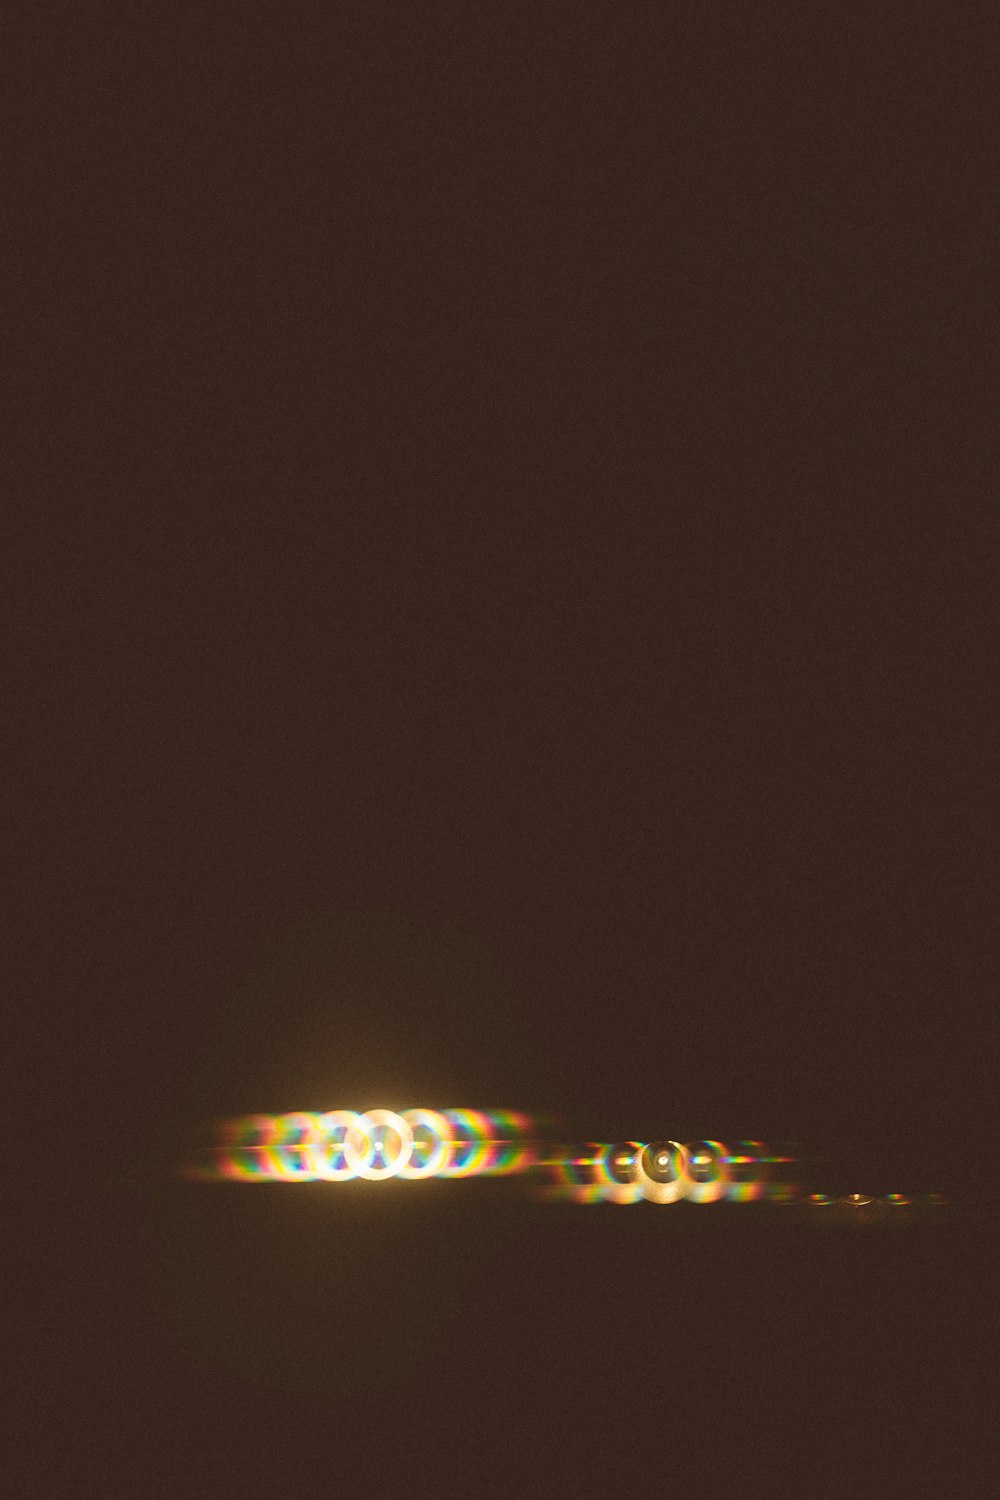 a blurry image of a light